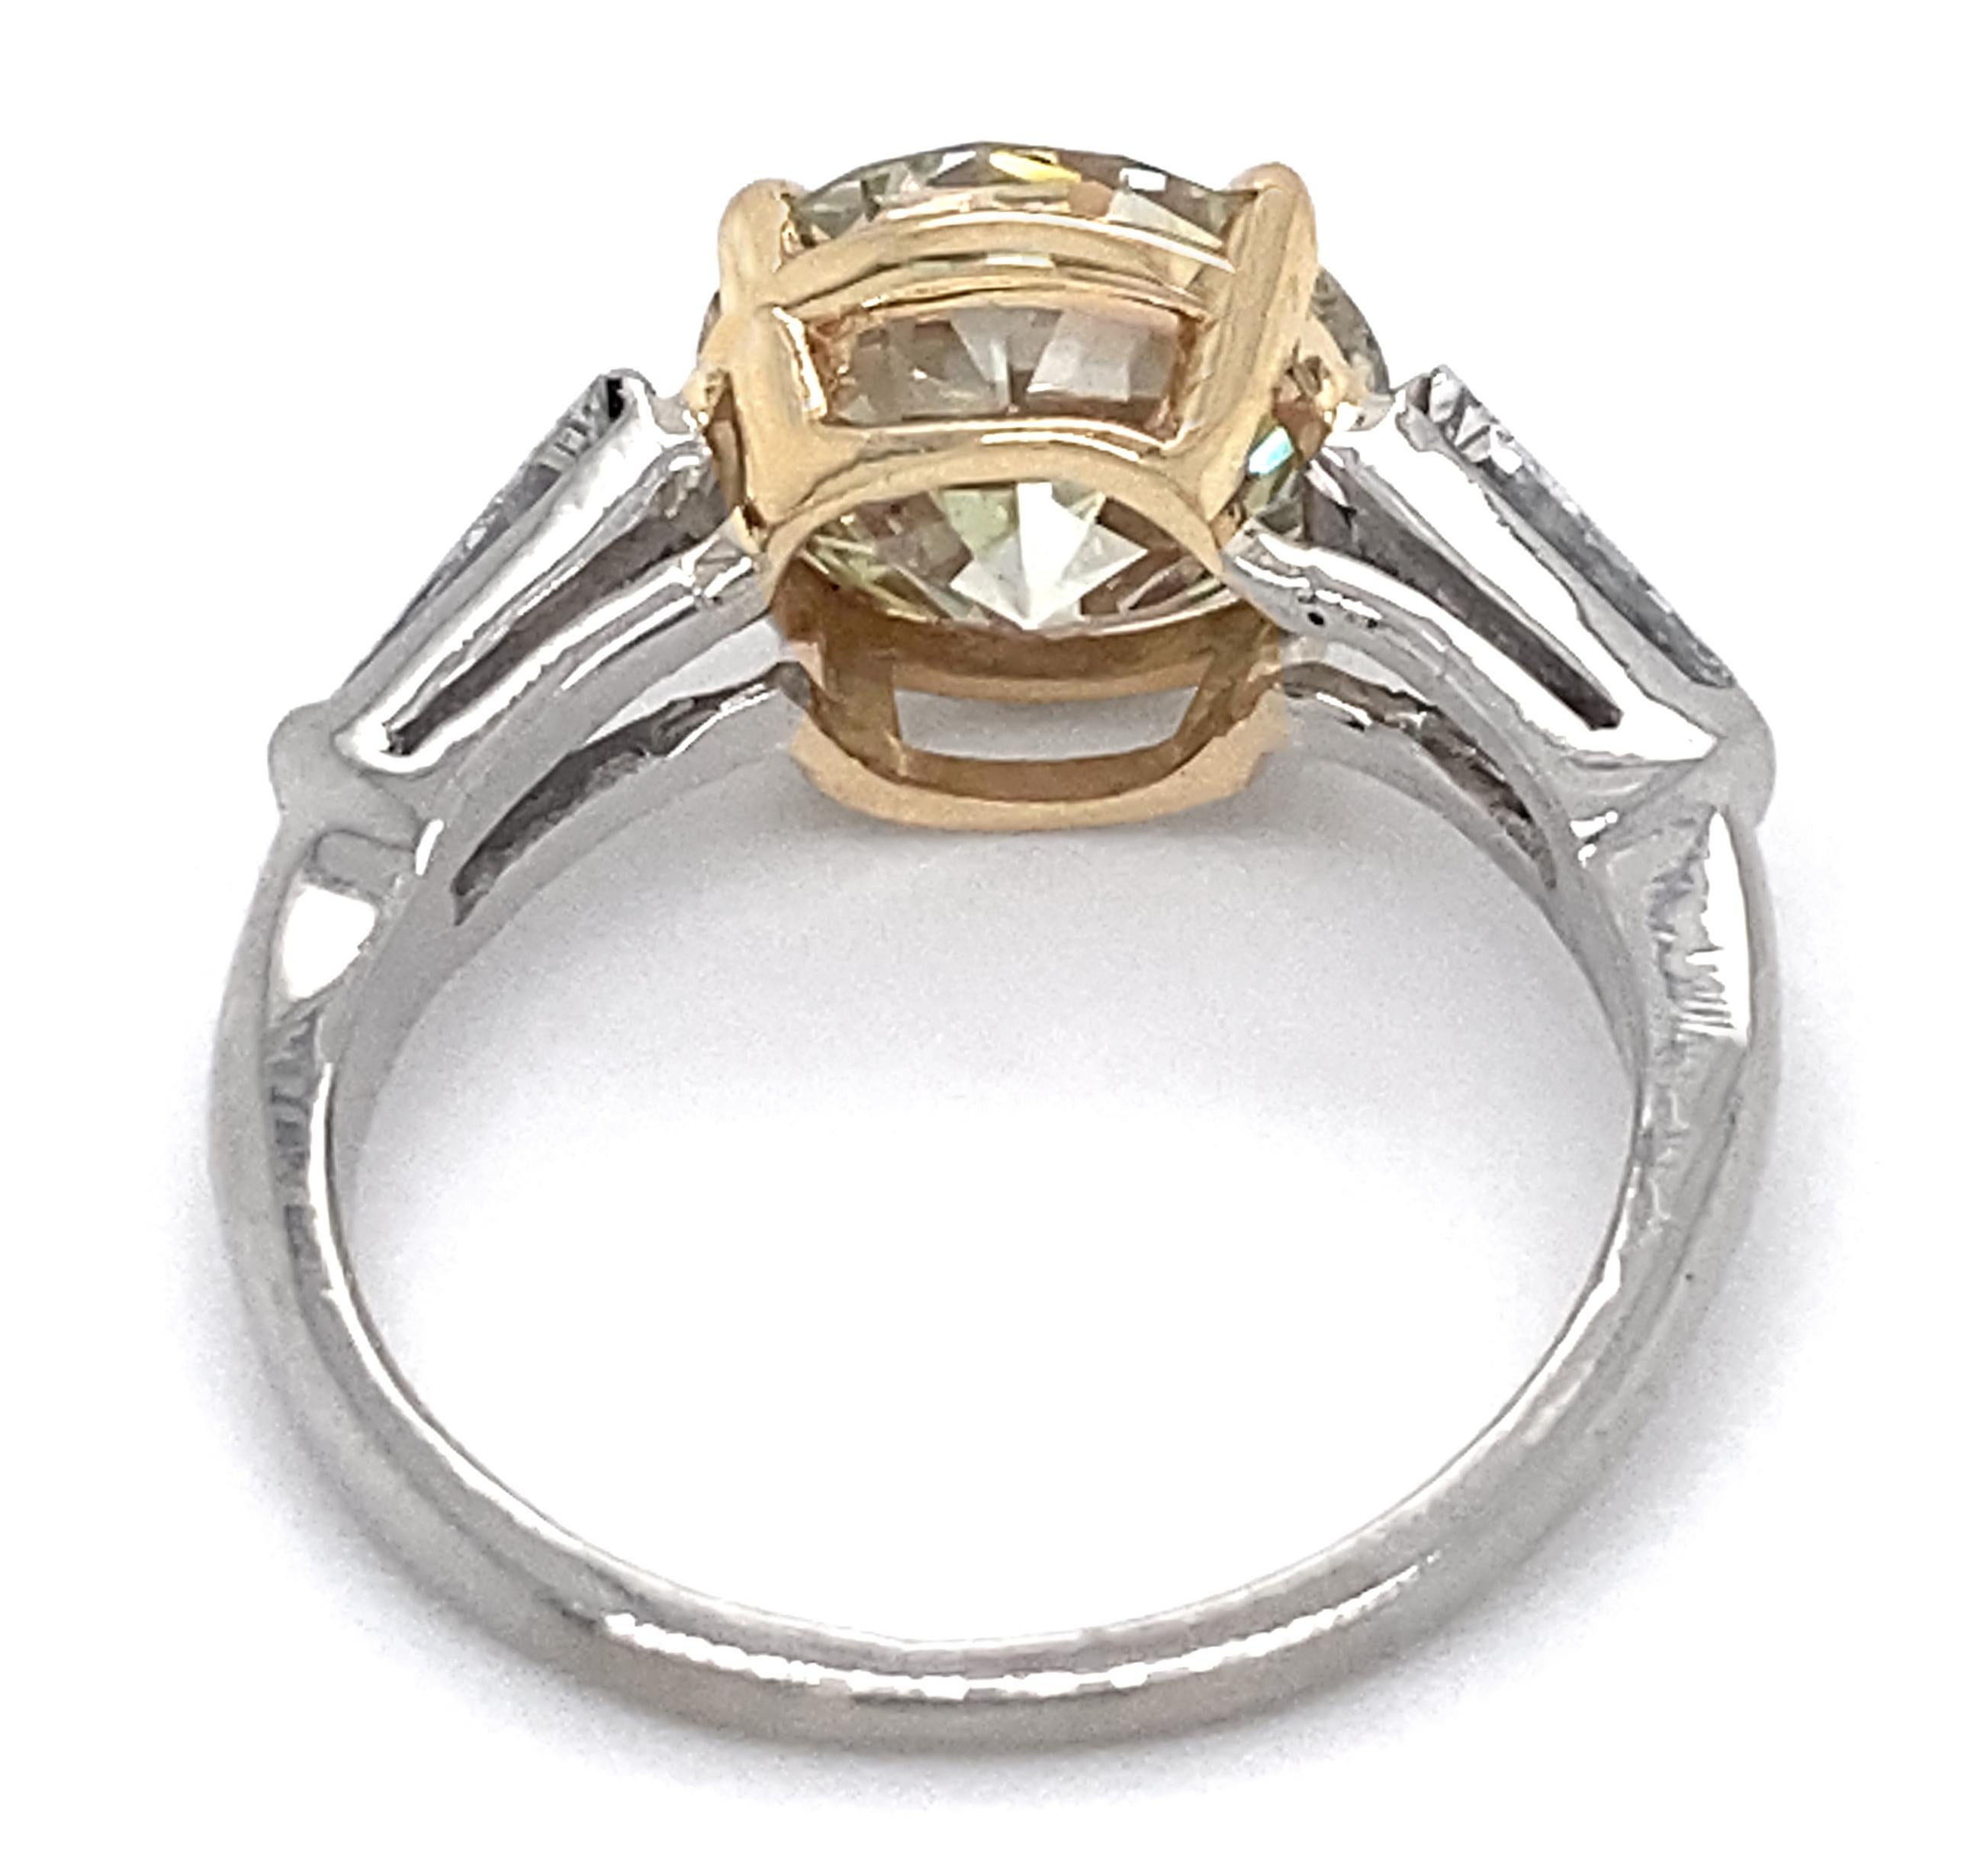 Certified 3.16 Carat Transitional Cut Diamond in Platinum & Gold 3-Stone Ring 7